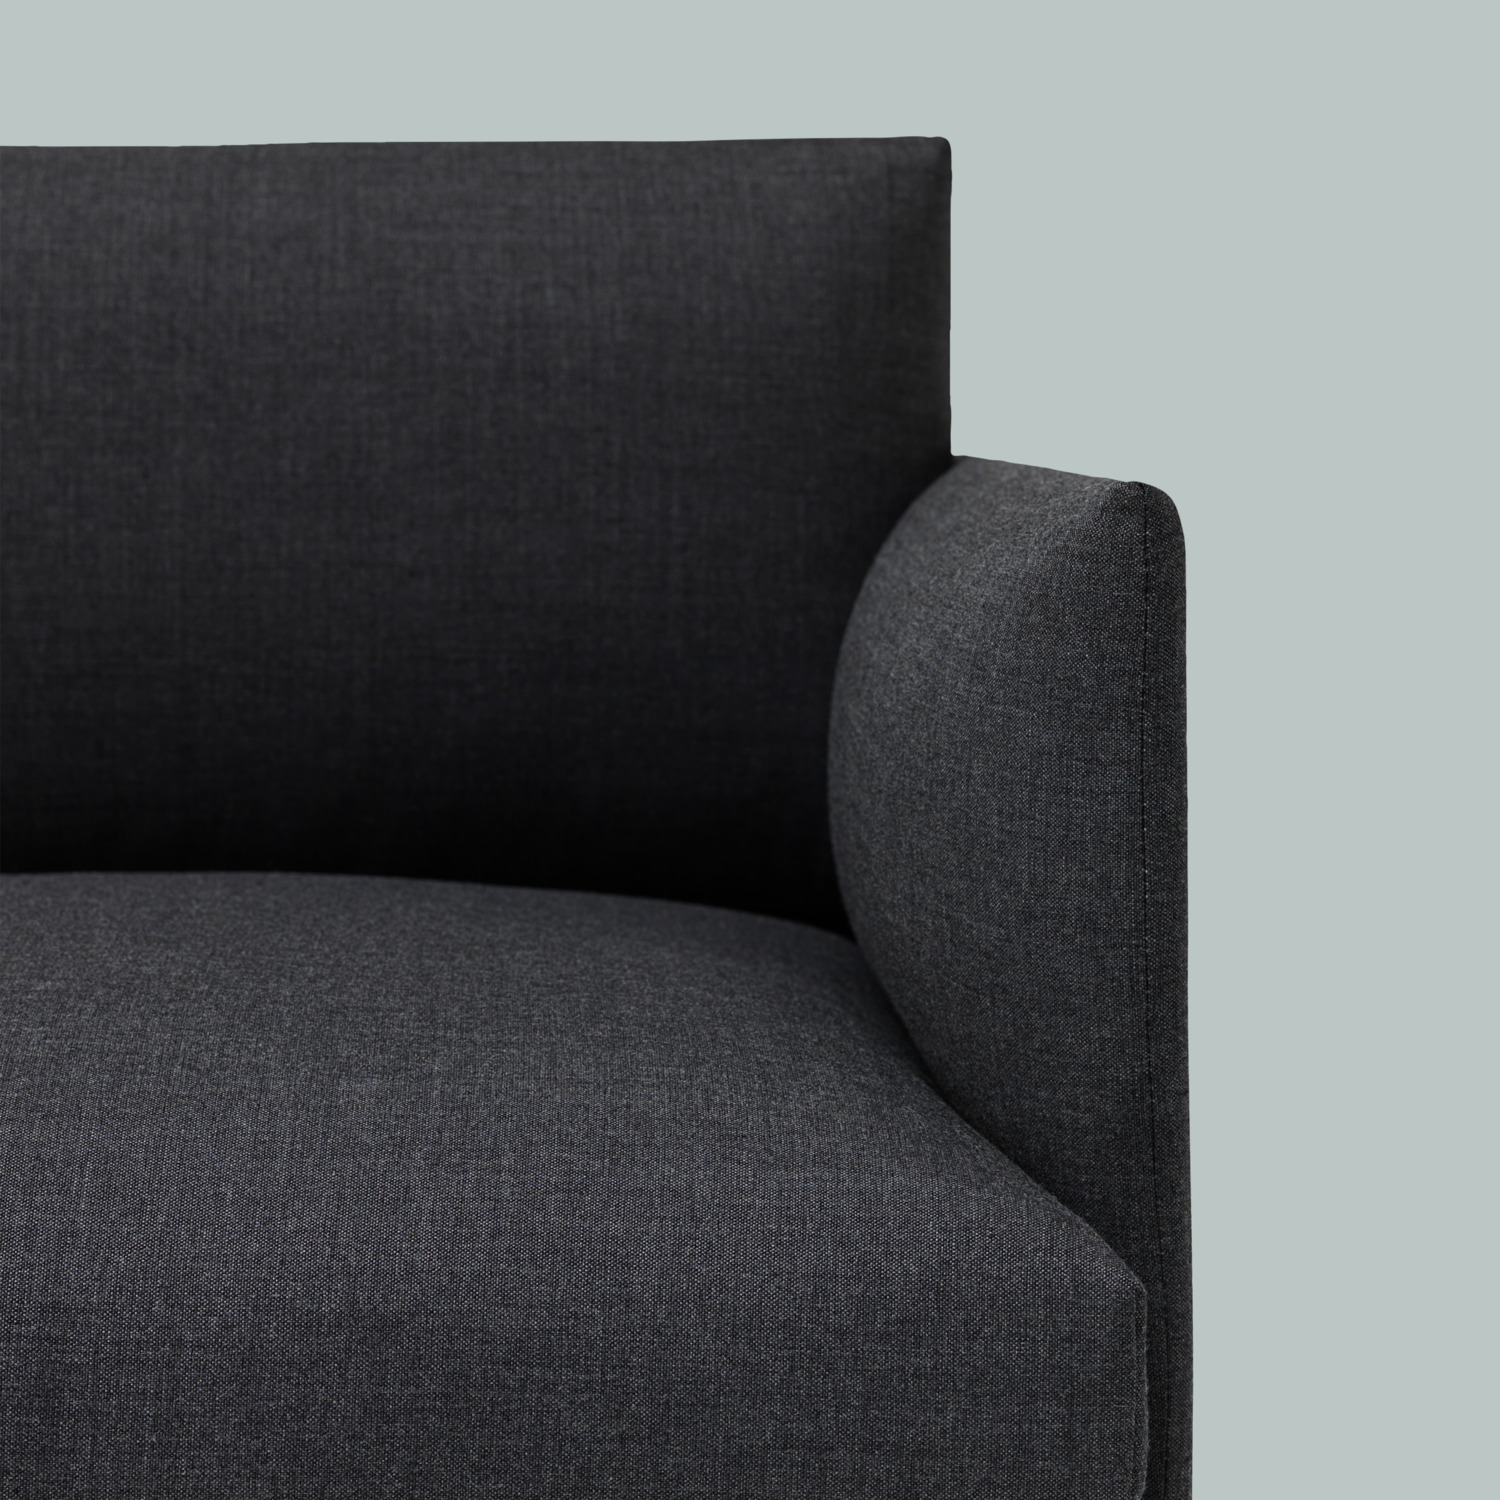 Outline Studio Chair | Compact elegance